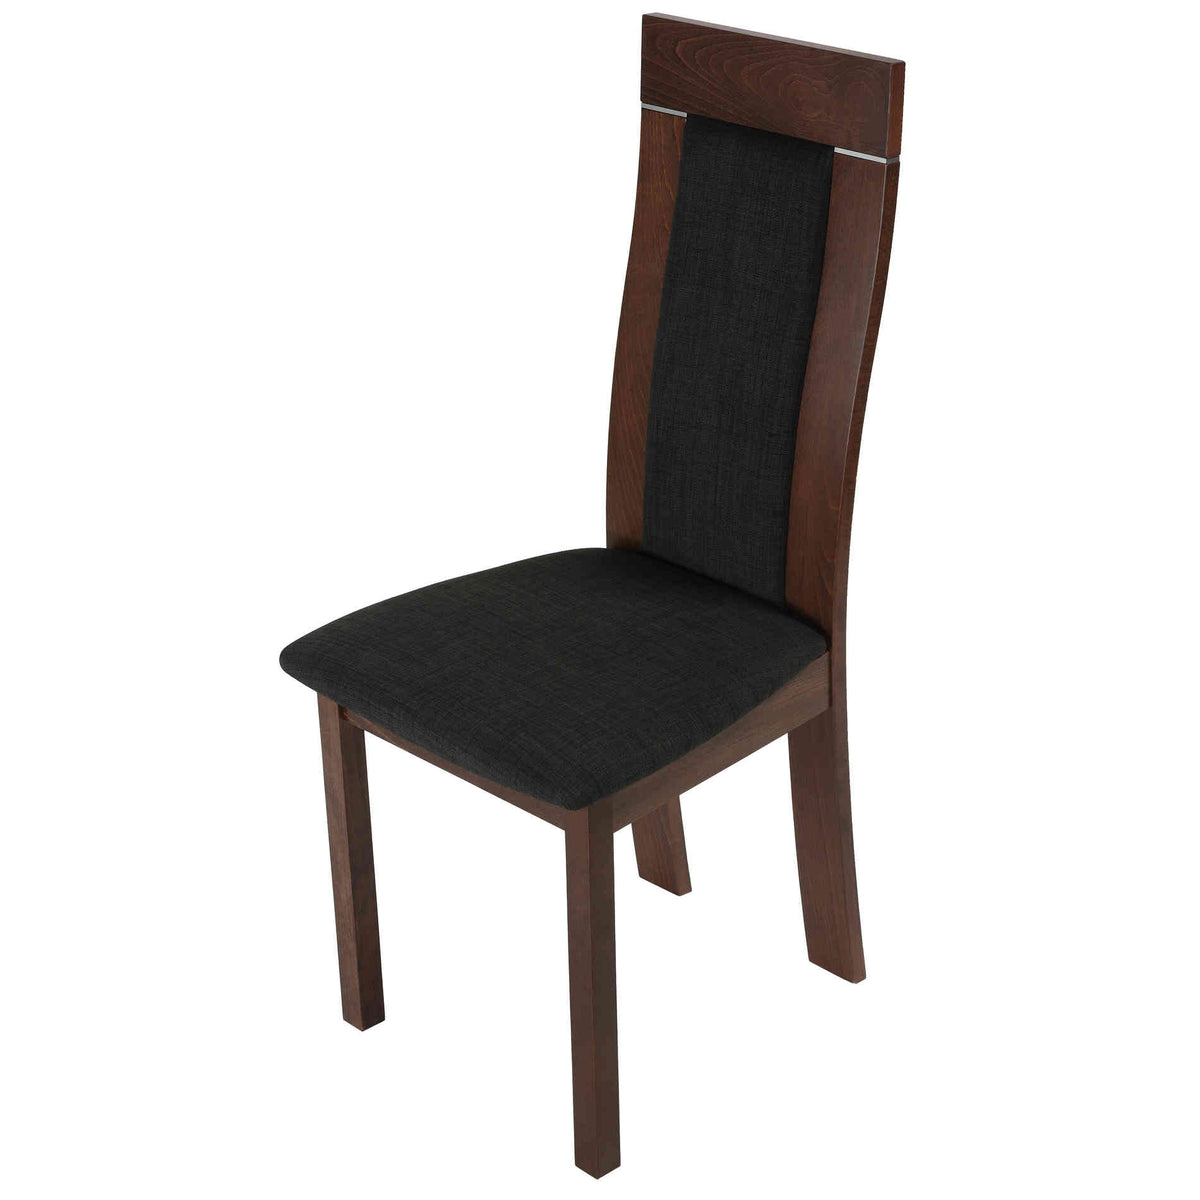 Cortesi Home Tia Dining Chair in Charcoal Fabric, Walnut Finish (Set of 2)